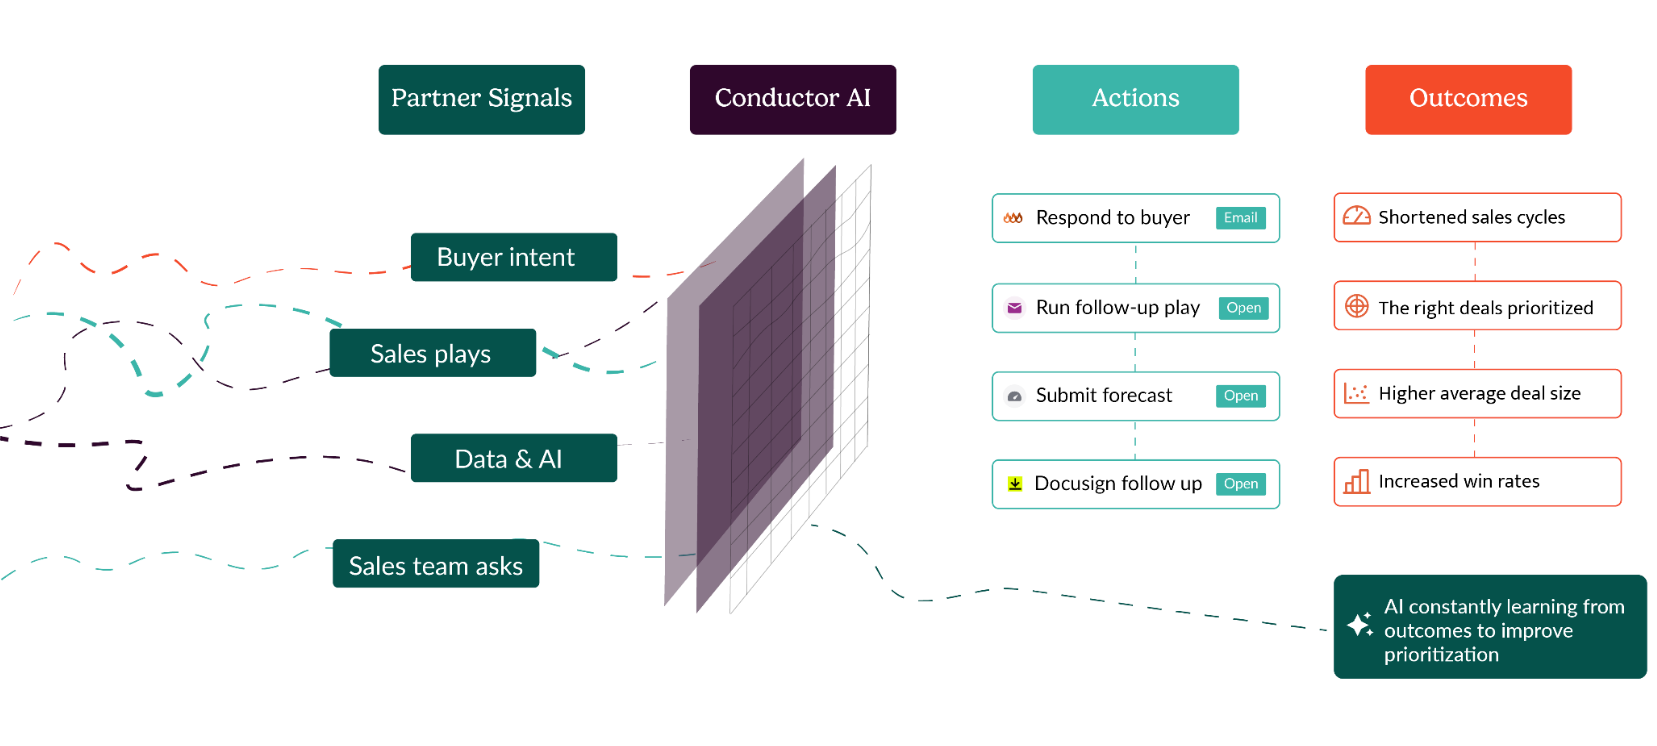 Diagram explaining how Conductor AI filters Partner Signals